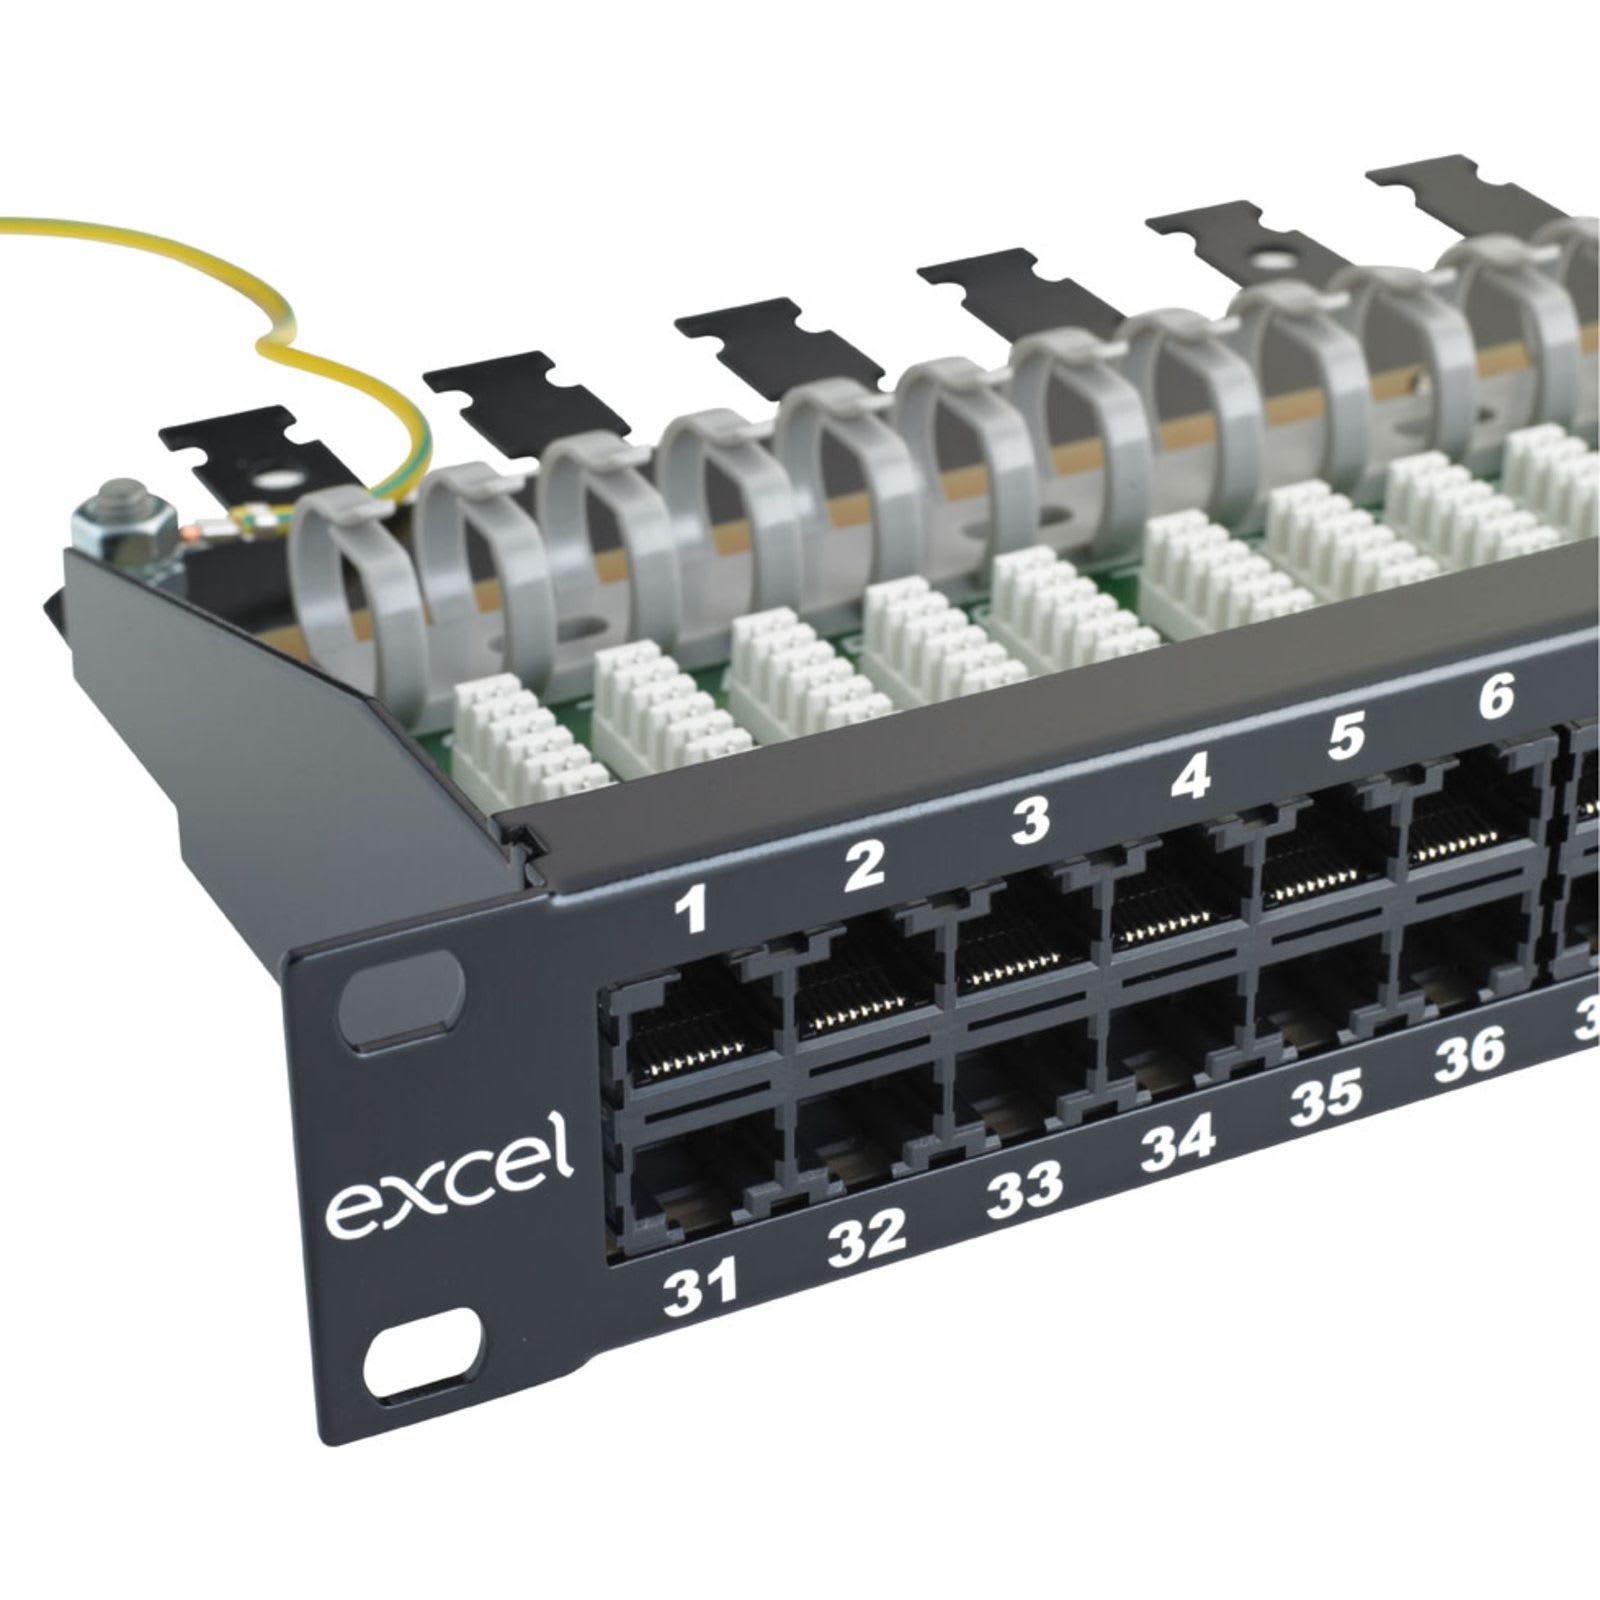 Excel Networking Solutions - Voice RJ45 Patch Panel - 50-port, 3-pair, 1U - Black